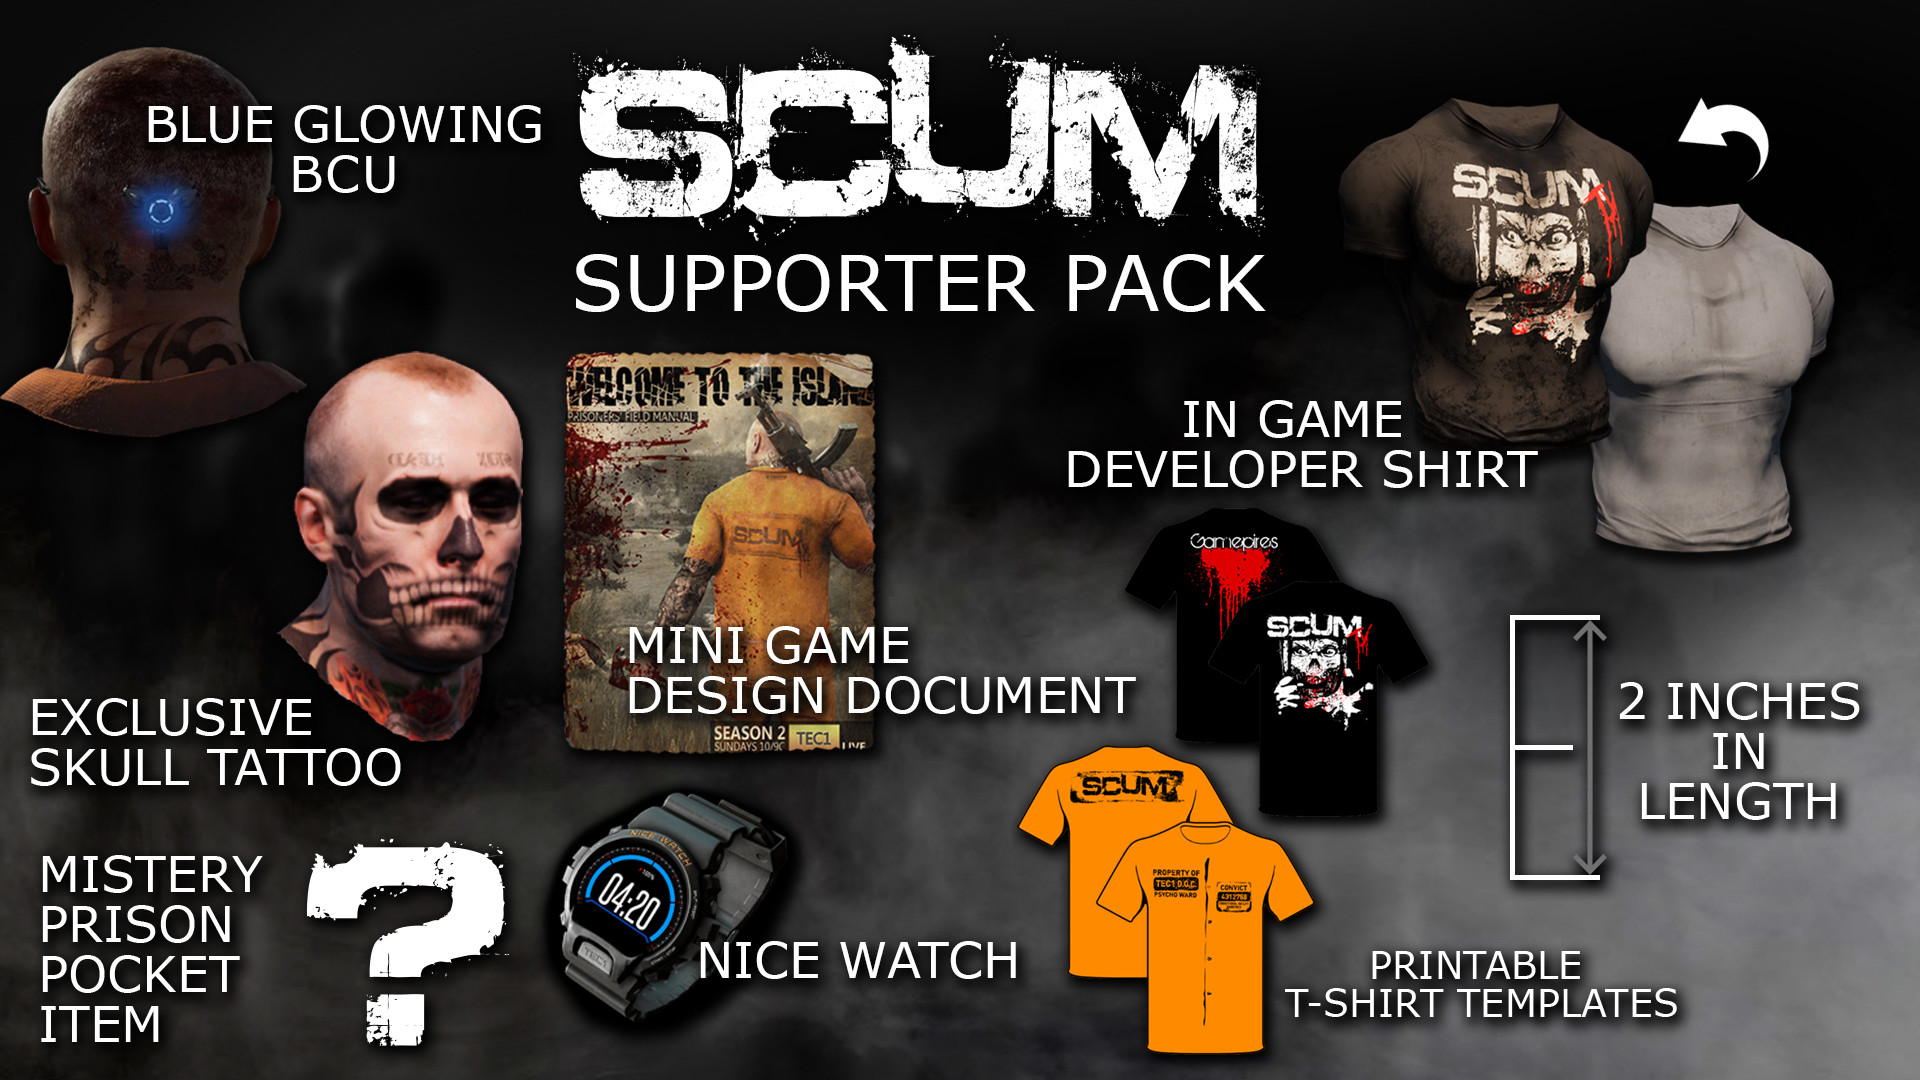 SCUM - Supporter Pack 1 DLC Steam CD Key